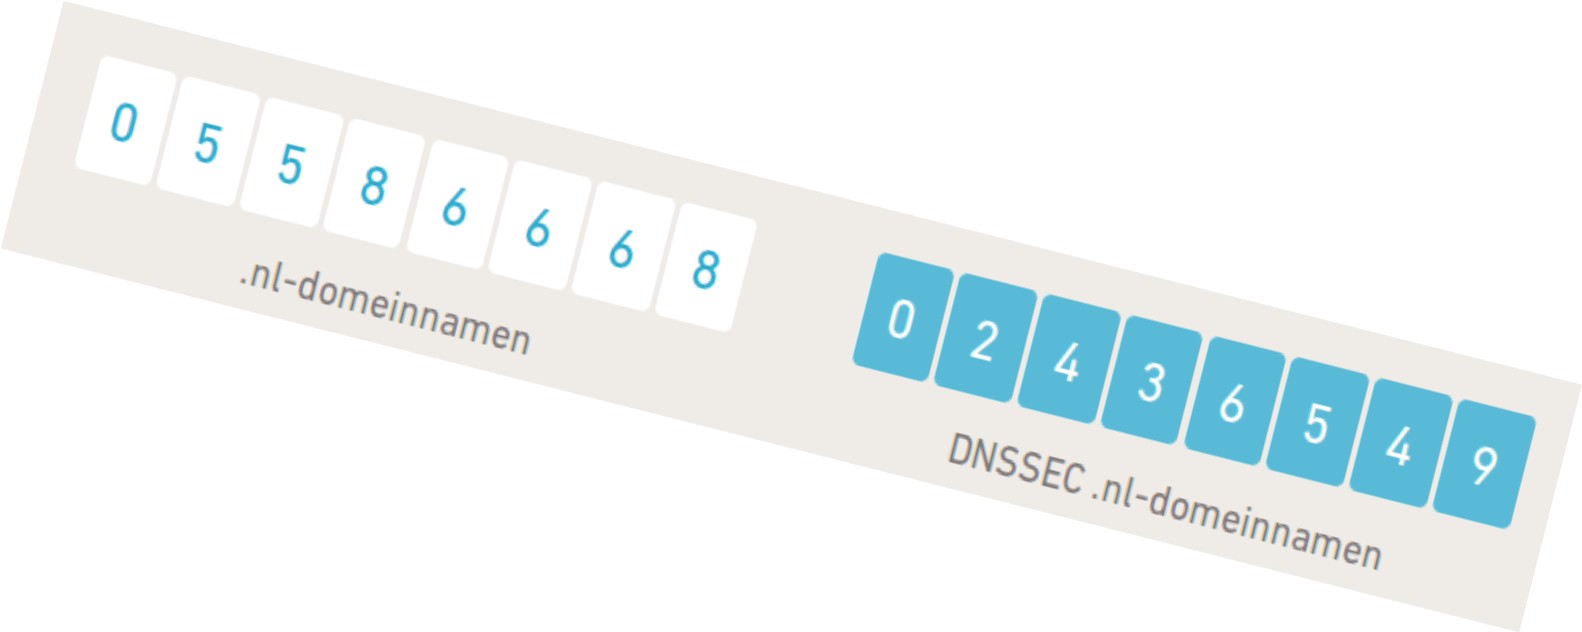 DNSSEC in.